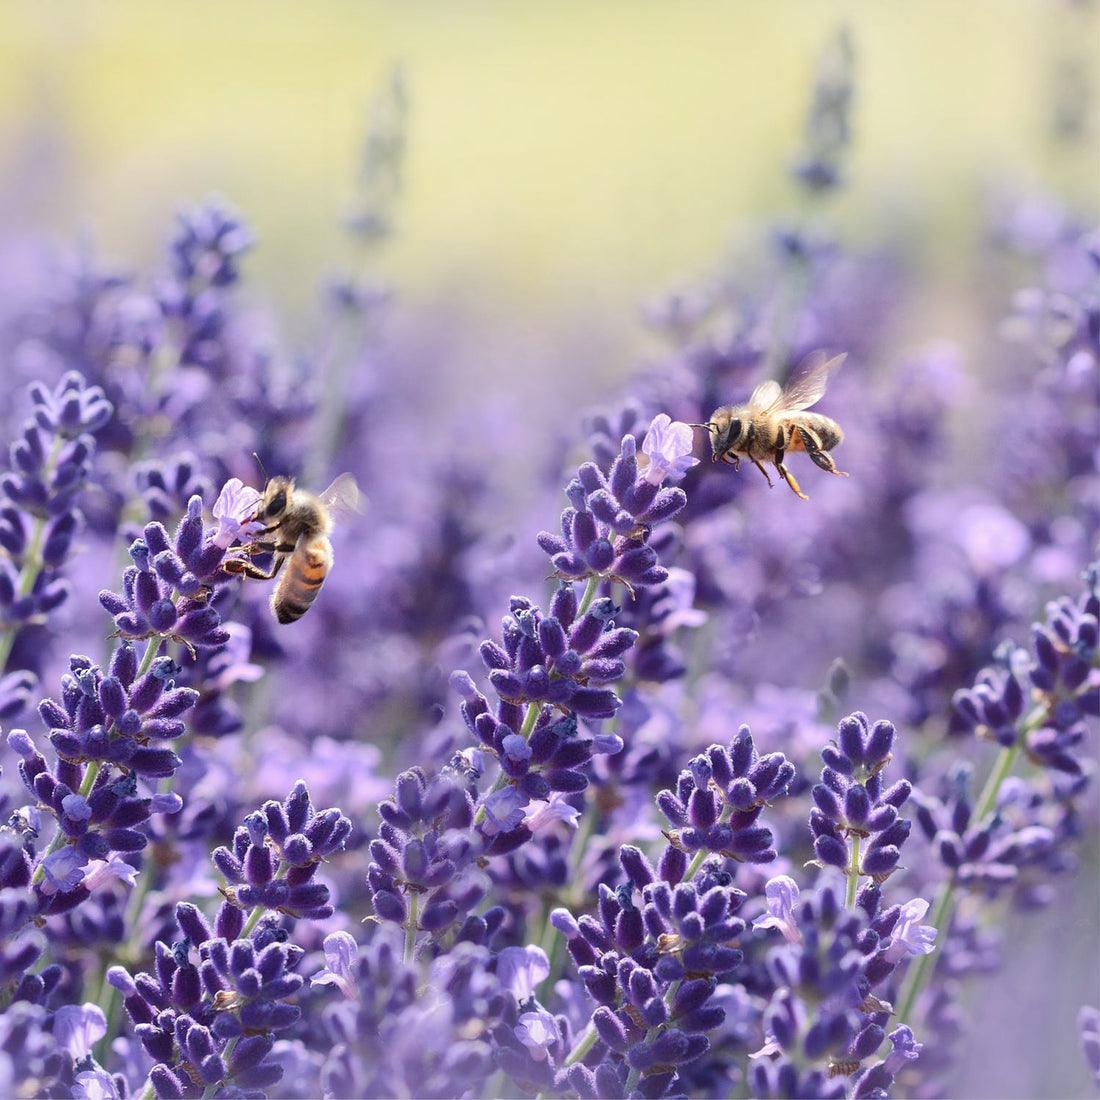 Plant a Bee-friendly garden